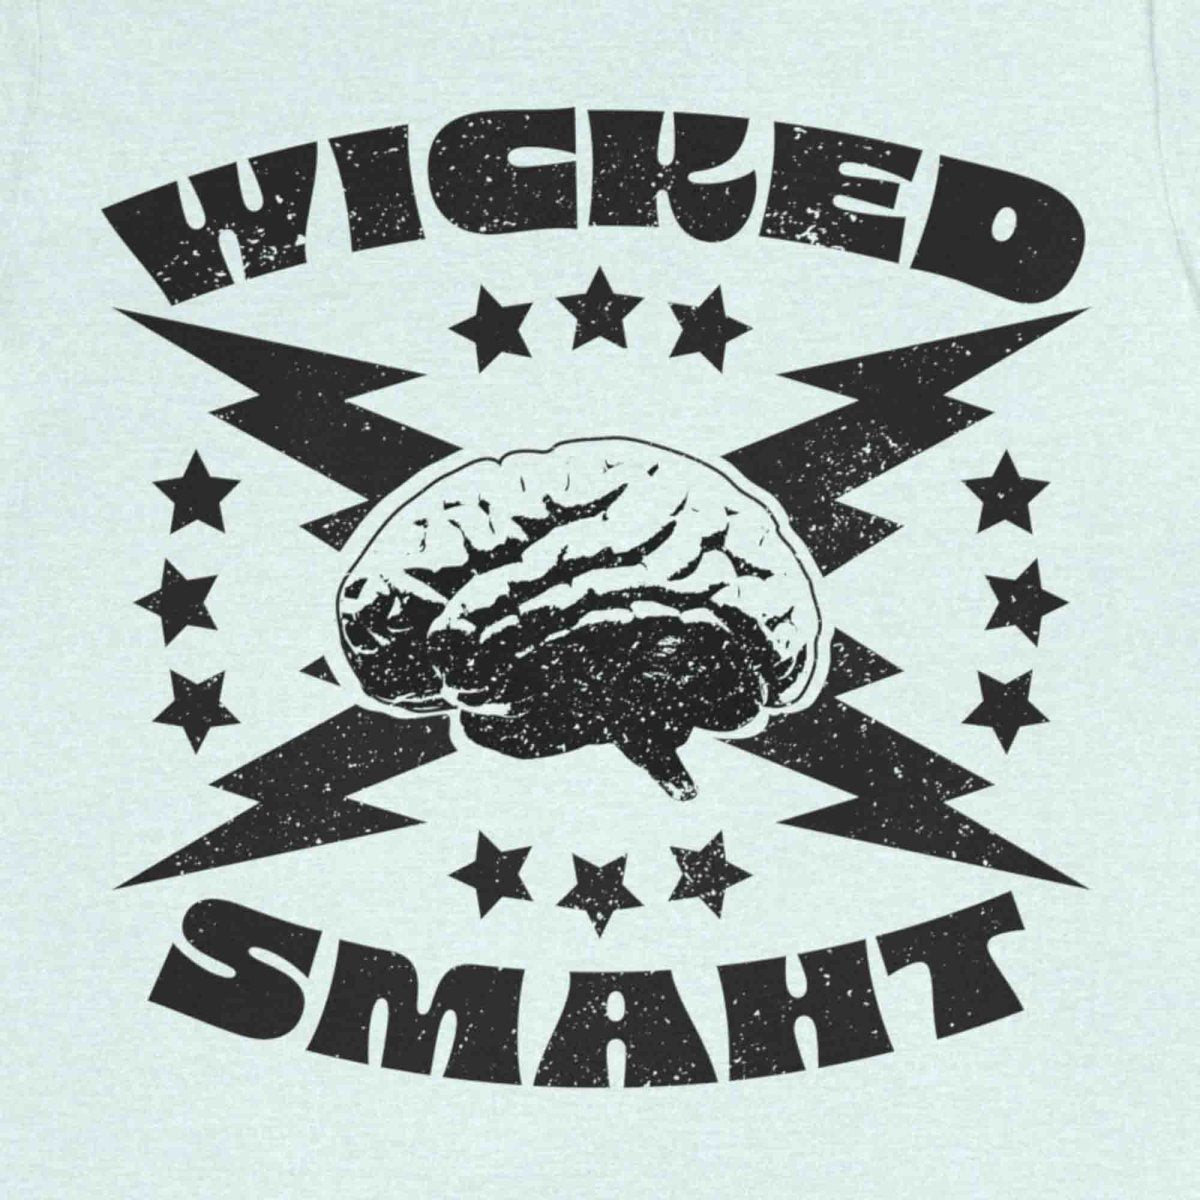 Wicked Smaht Premium T-Shirt, New England, Boston, Smart, Accent, Funny